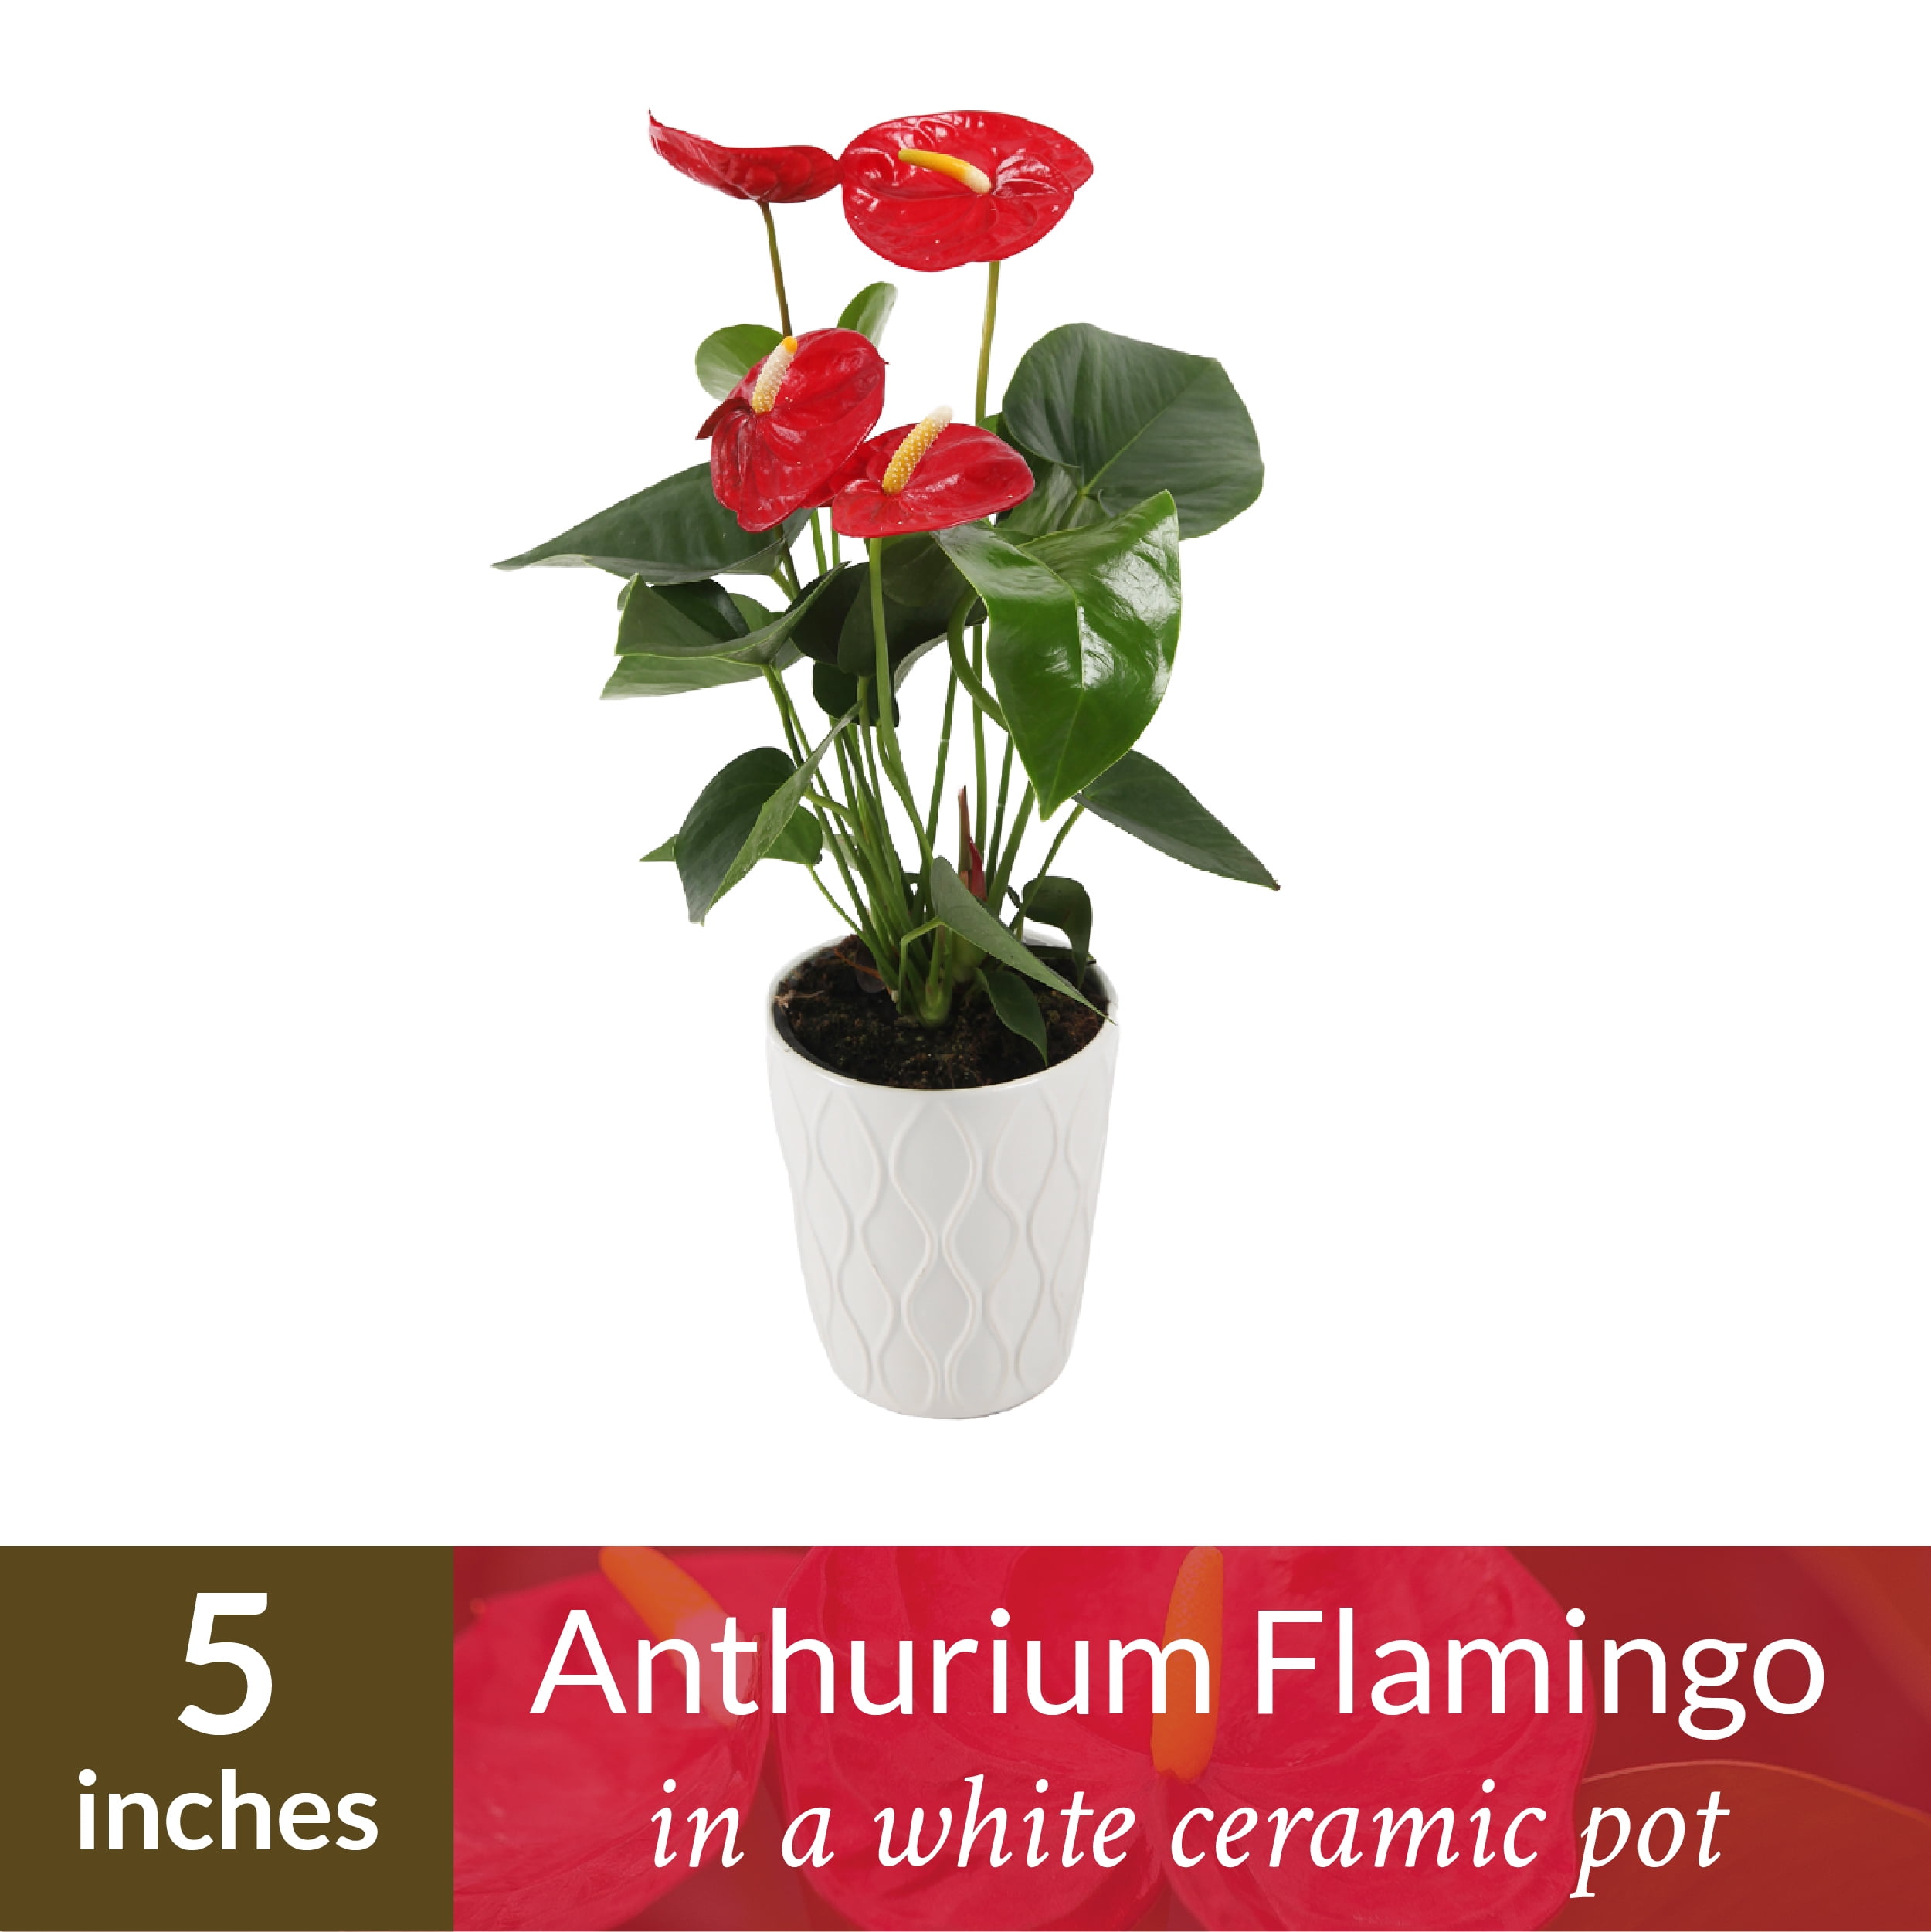 Just Ice Anthurium, 14-18” Tall, Red Ceramic Pot - Walmart.com